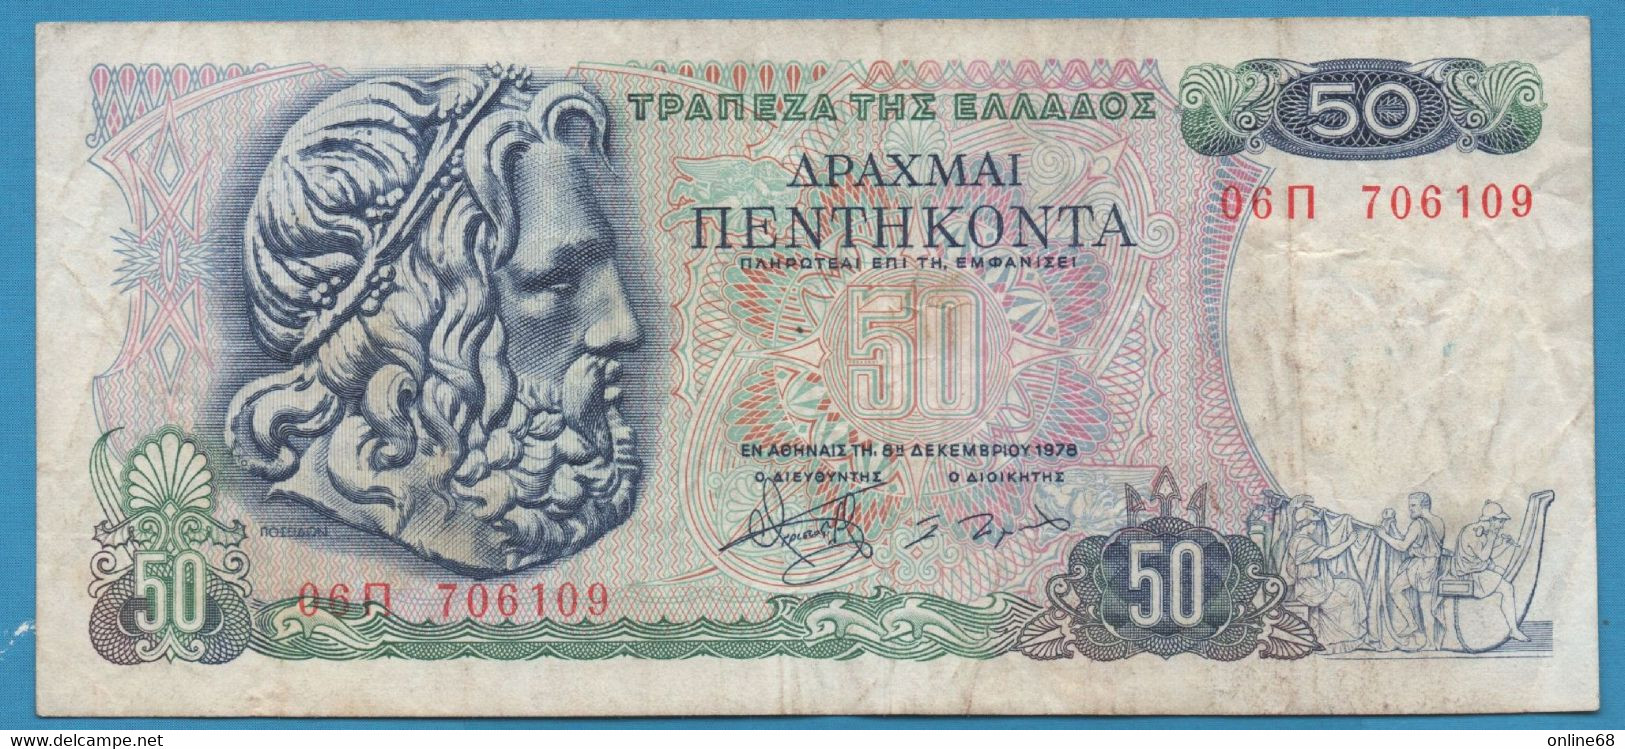 GREECE 50 DRACHMAI 08.12.1978 # 06Π 706109 F# 199 Poseidon - Griekenland